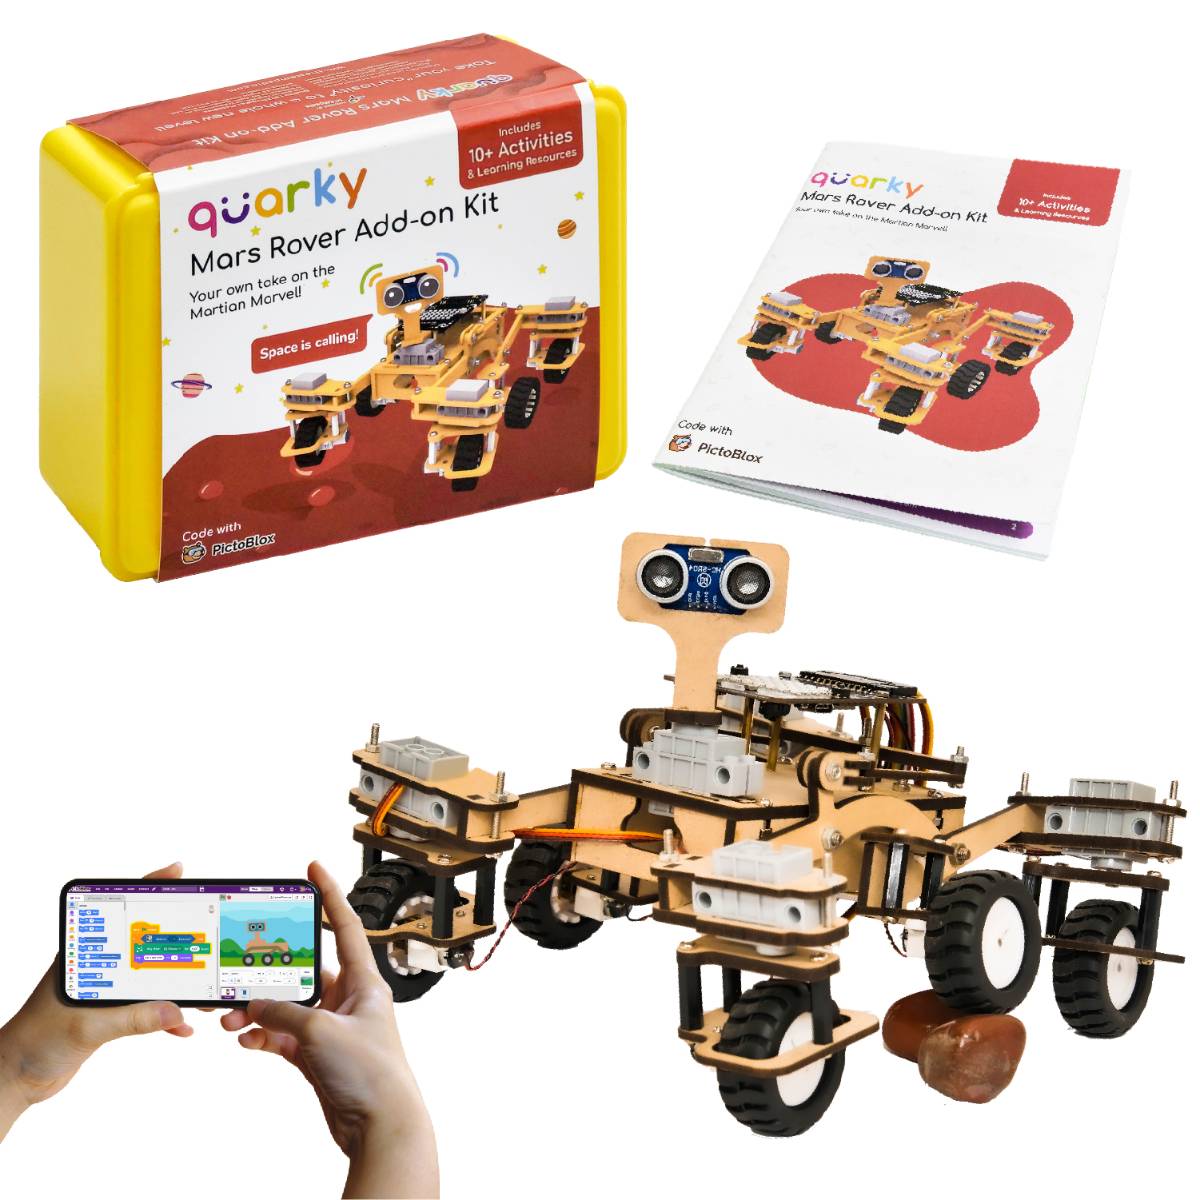 Quarky-Mars-Rover-Addon-Learning-Kit-for-Kids-Shop-Image